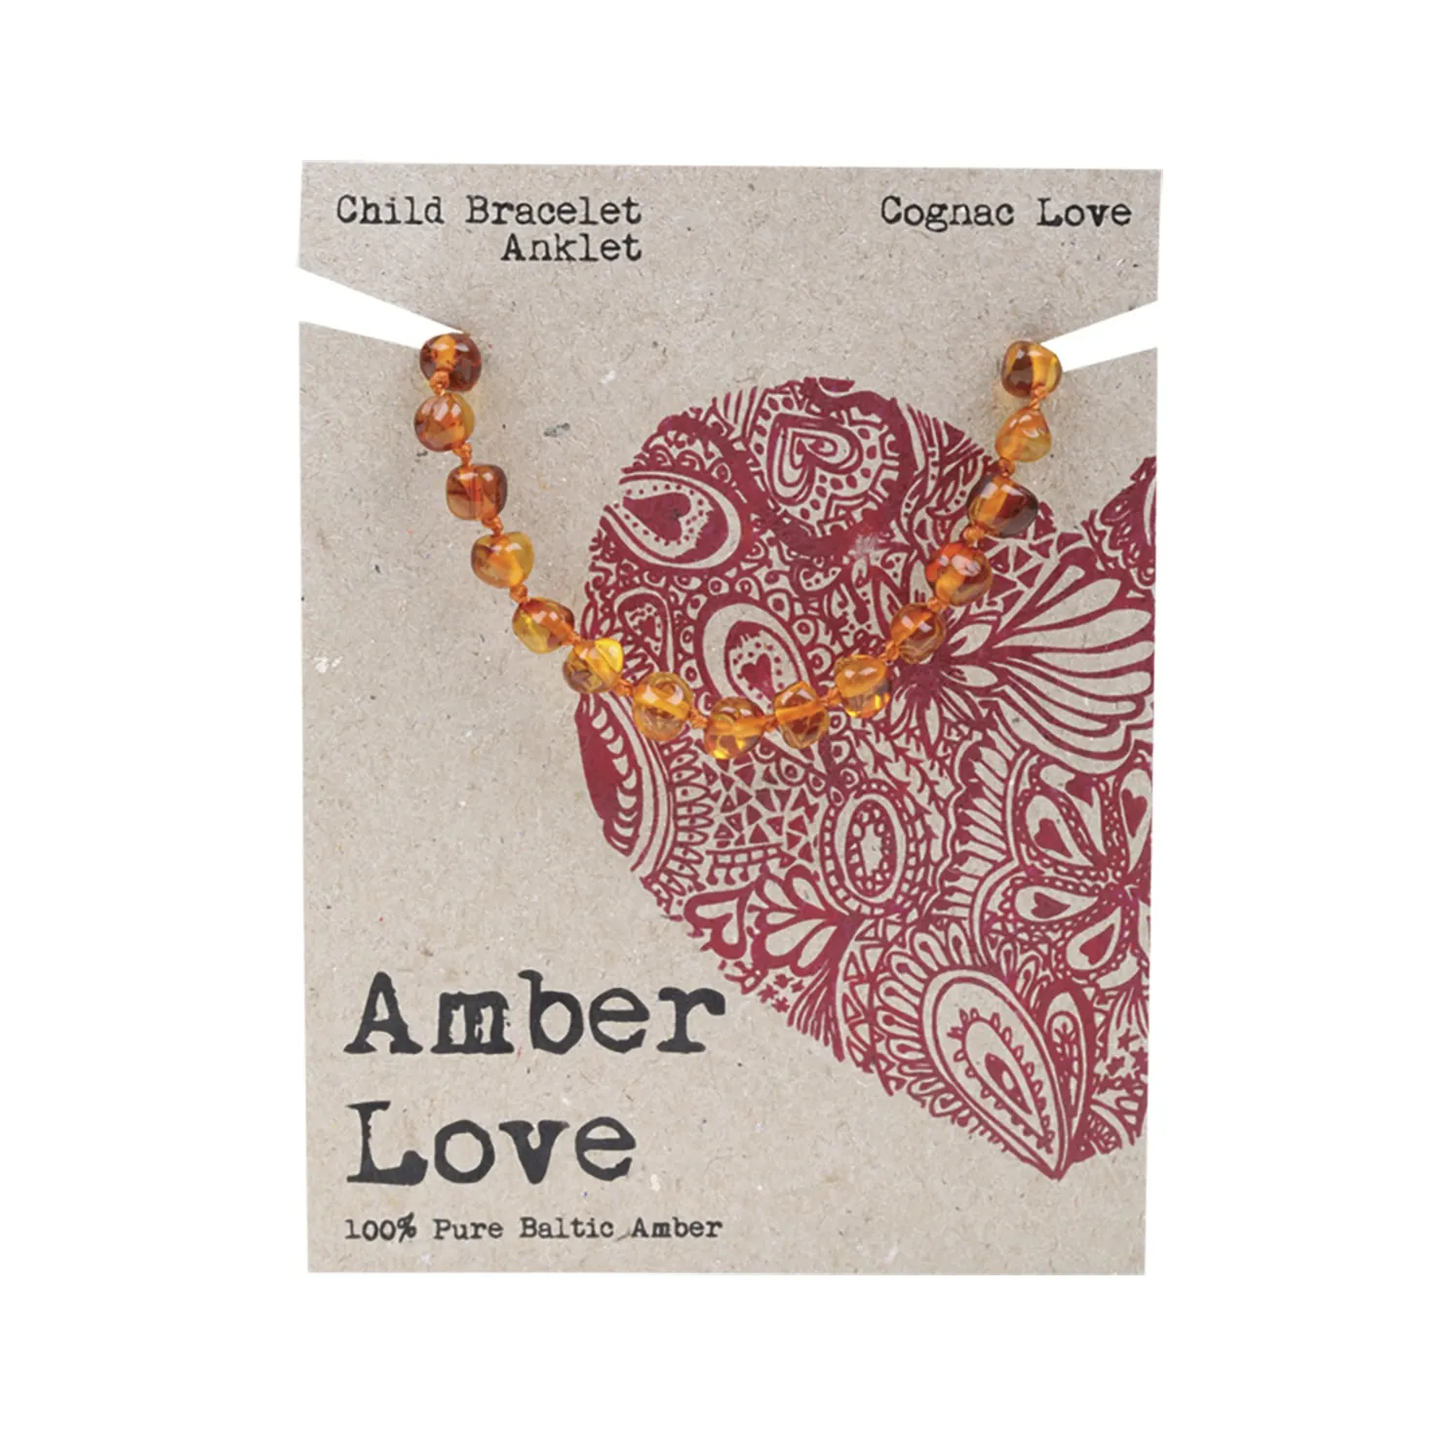 Amber Love 100% Baltic Amber, Children's Bracelet/Anklet 14cm, Please Choose Your Design